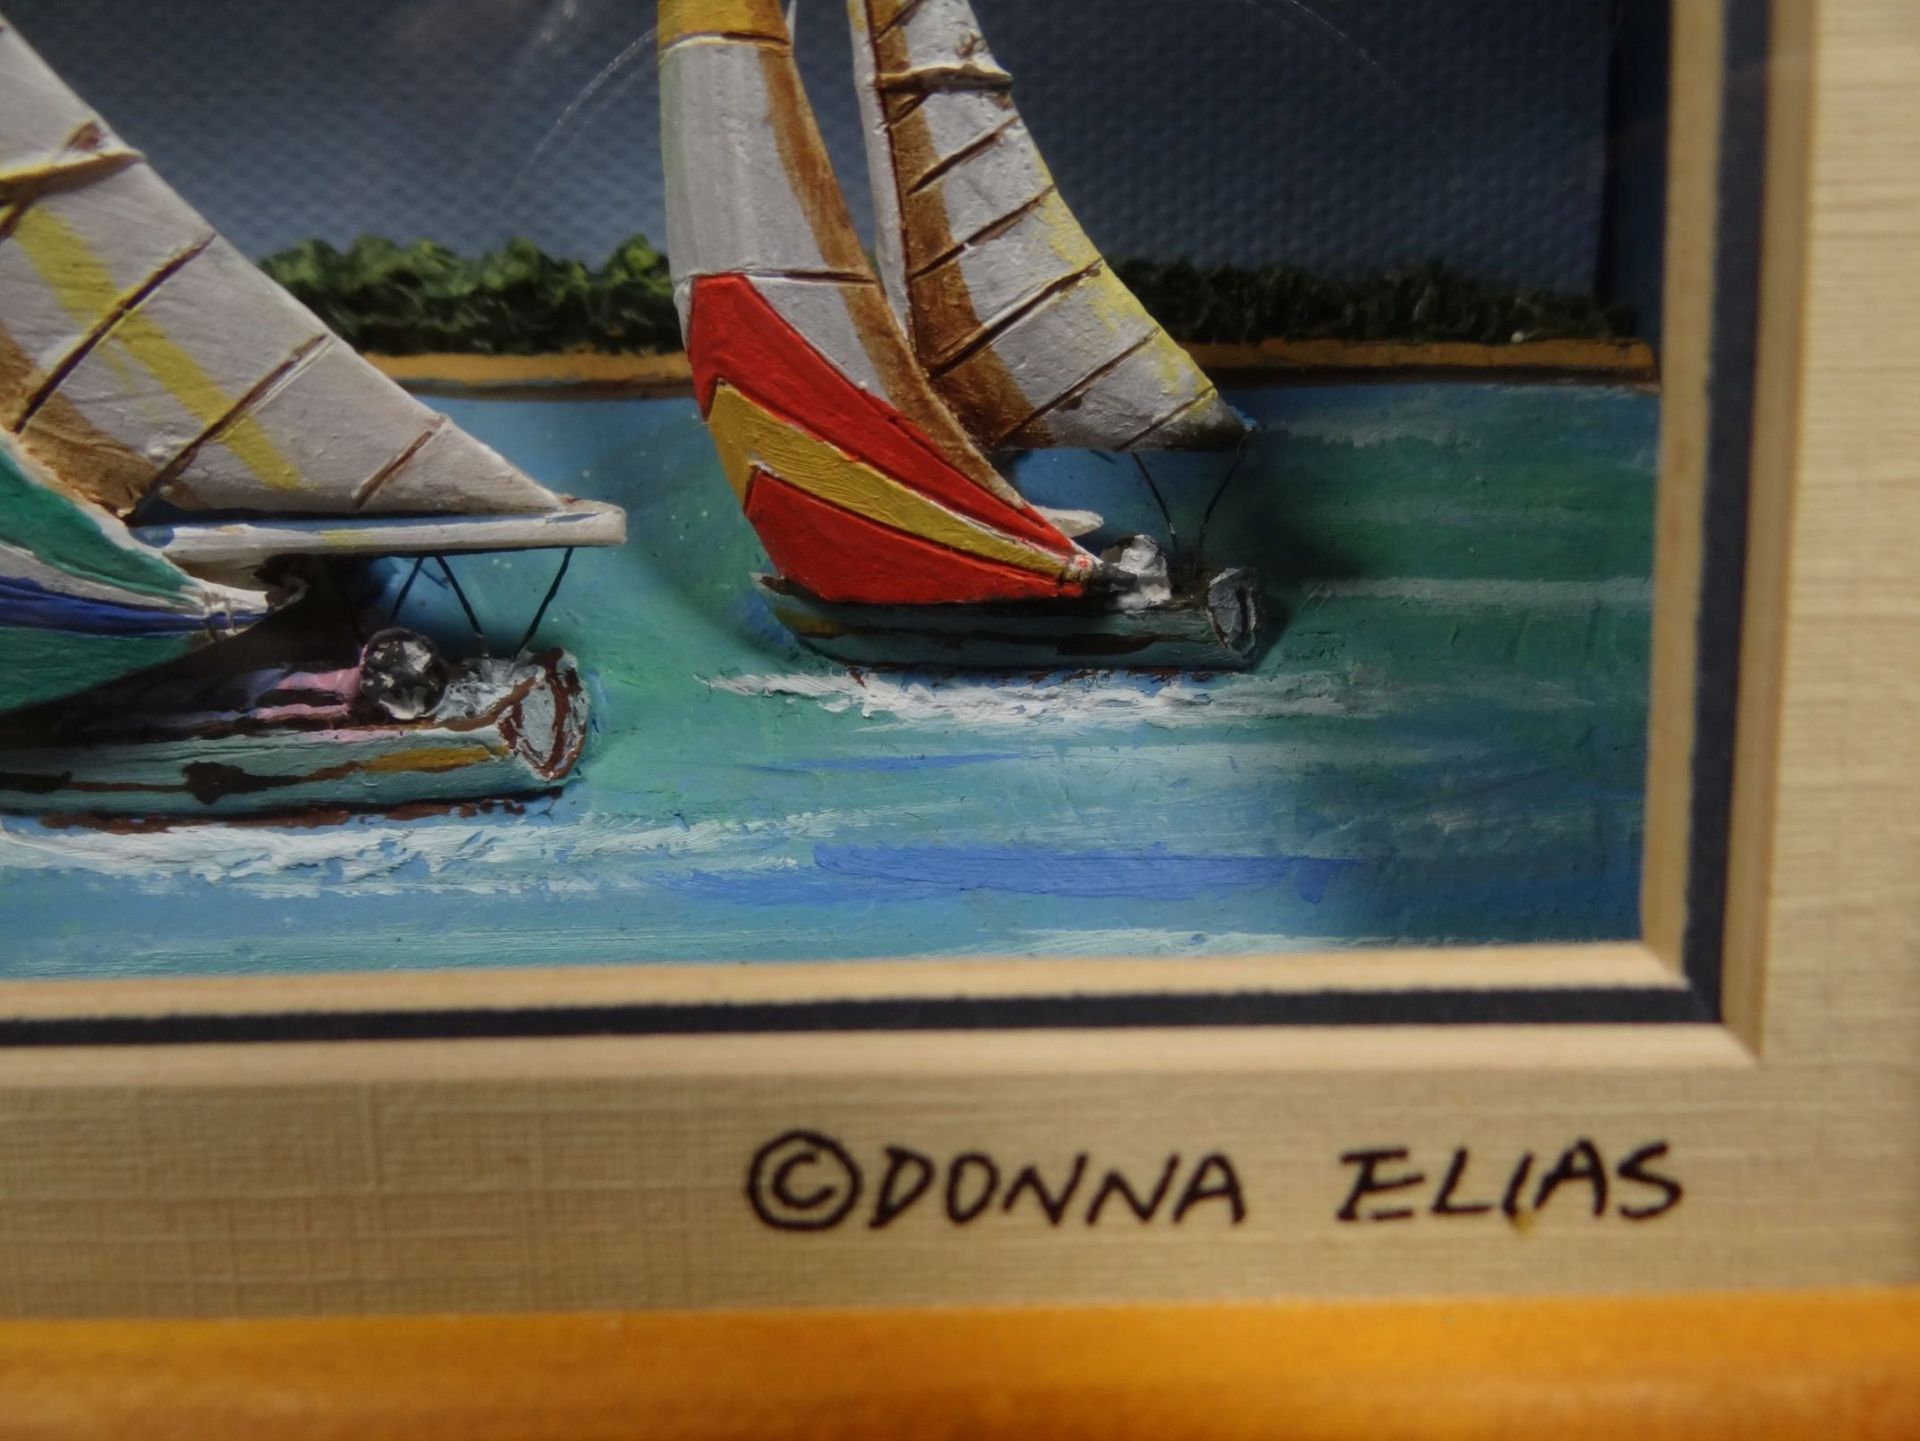 Donna Elias "Lighthouse Regatta" Diorama, als Tosch-oder Wandbild, 11,5x23 cm"""" - Image 4 of 6